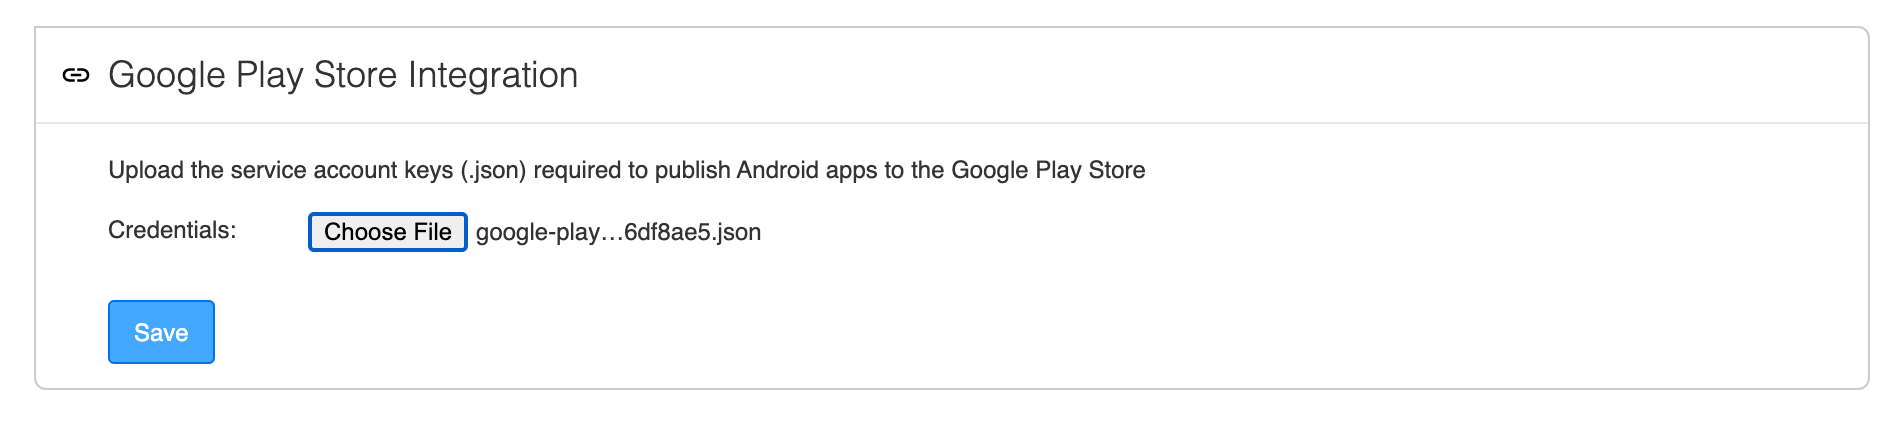 Google Play Store integration